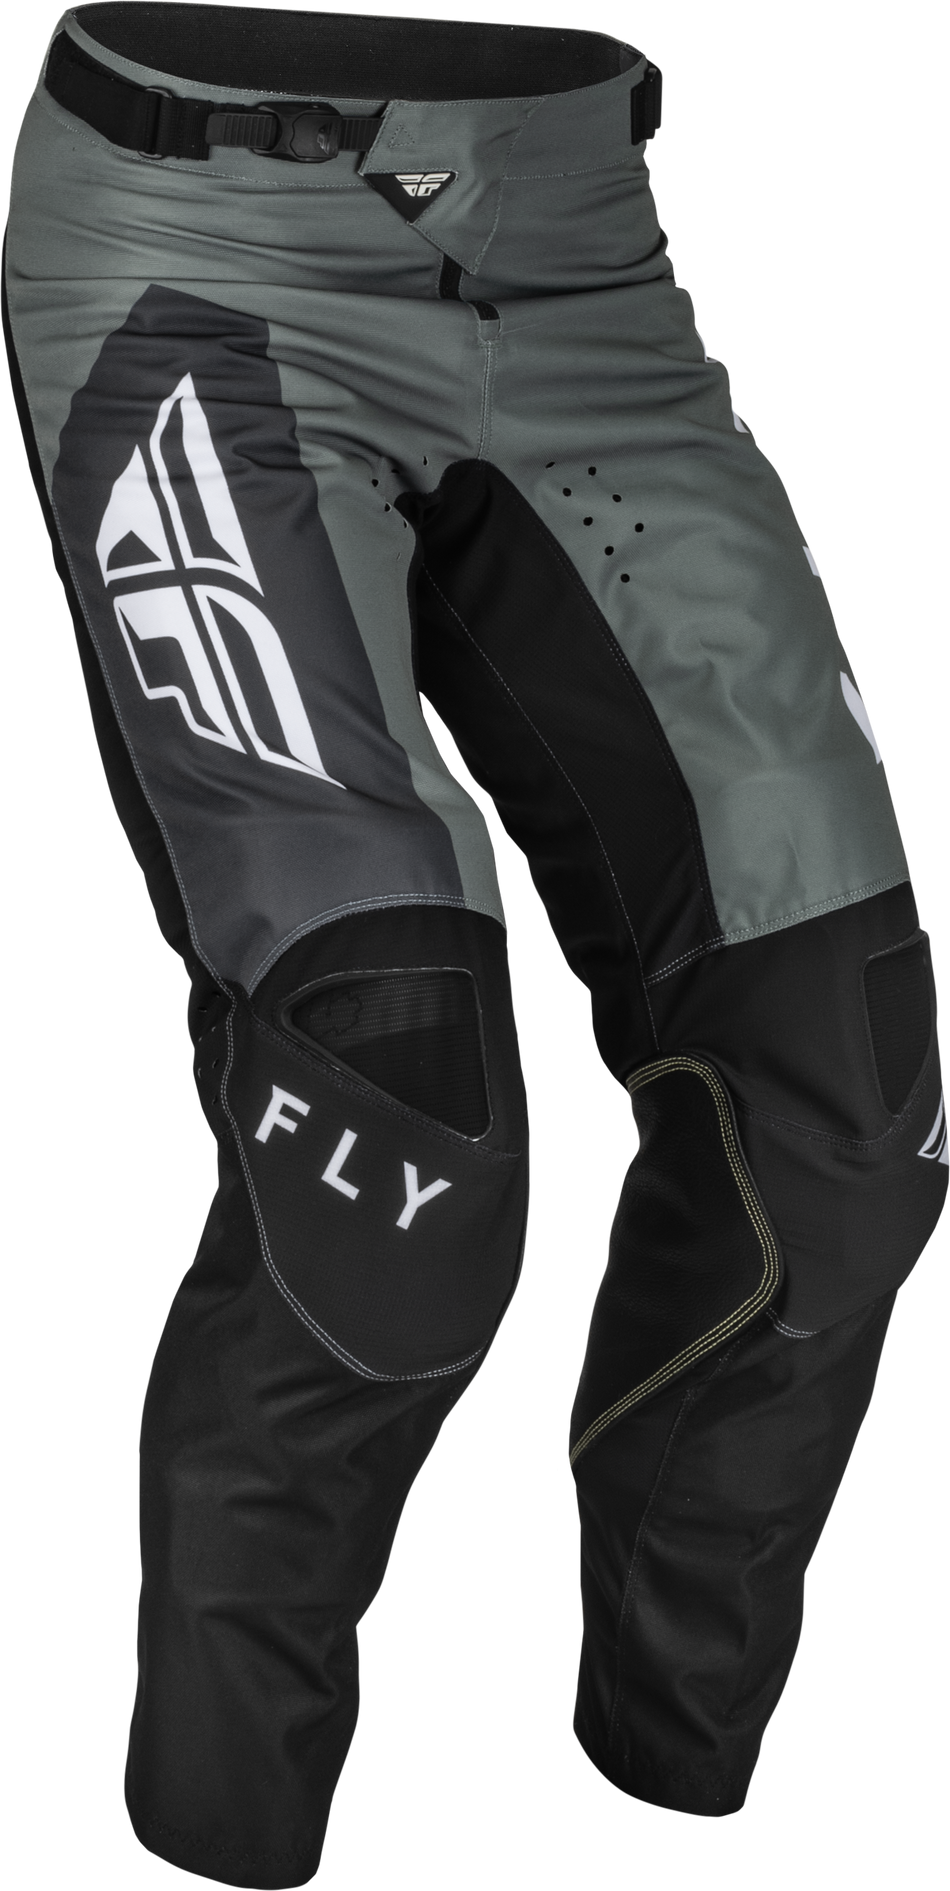 FLY RACING Kinetic Jet Pants Grey/Dark Grey/Black Sz 40 376-53340